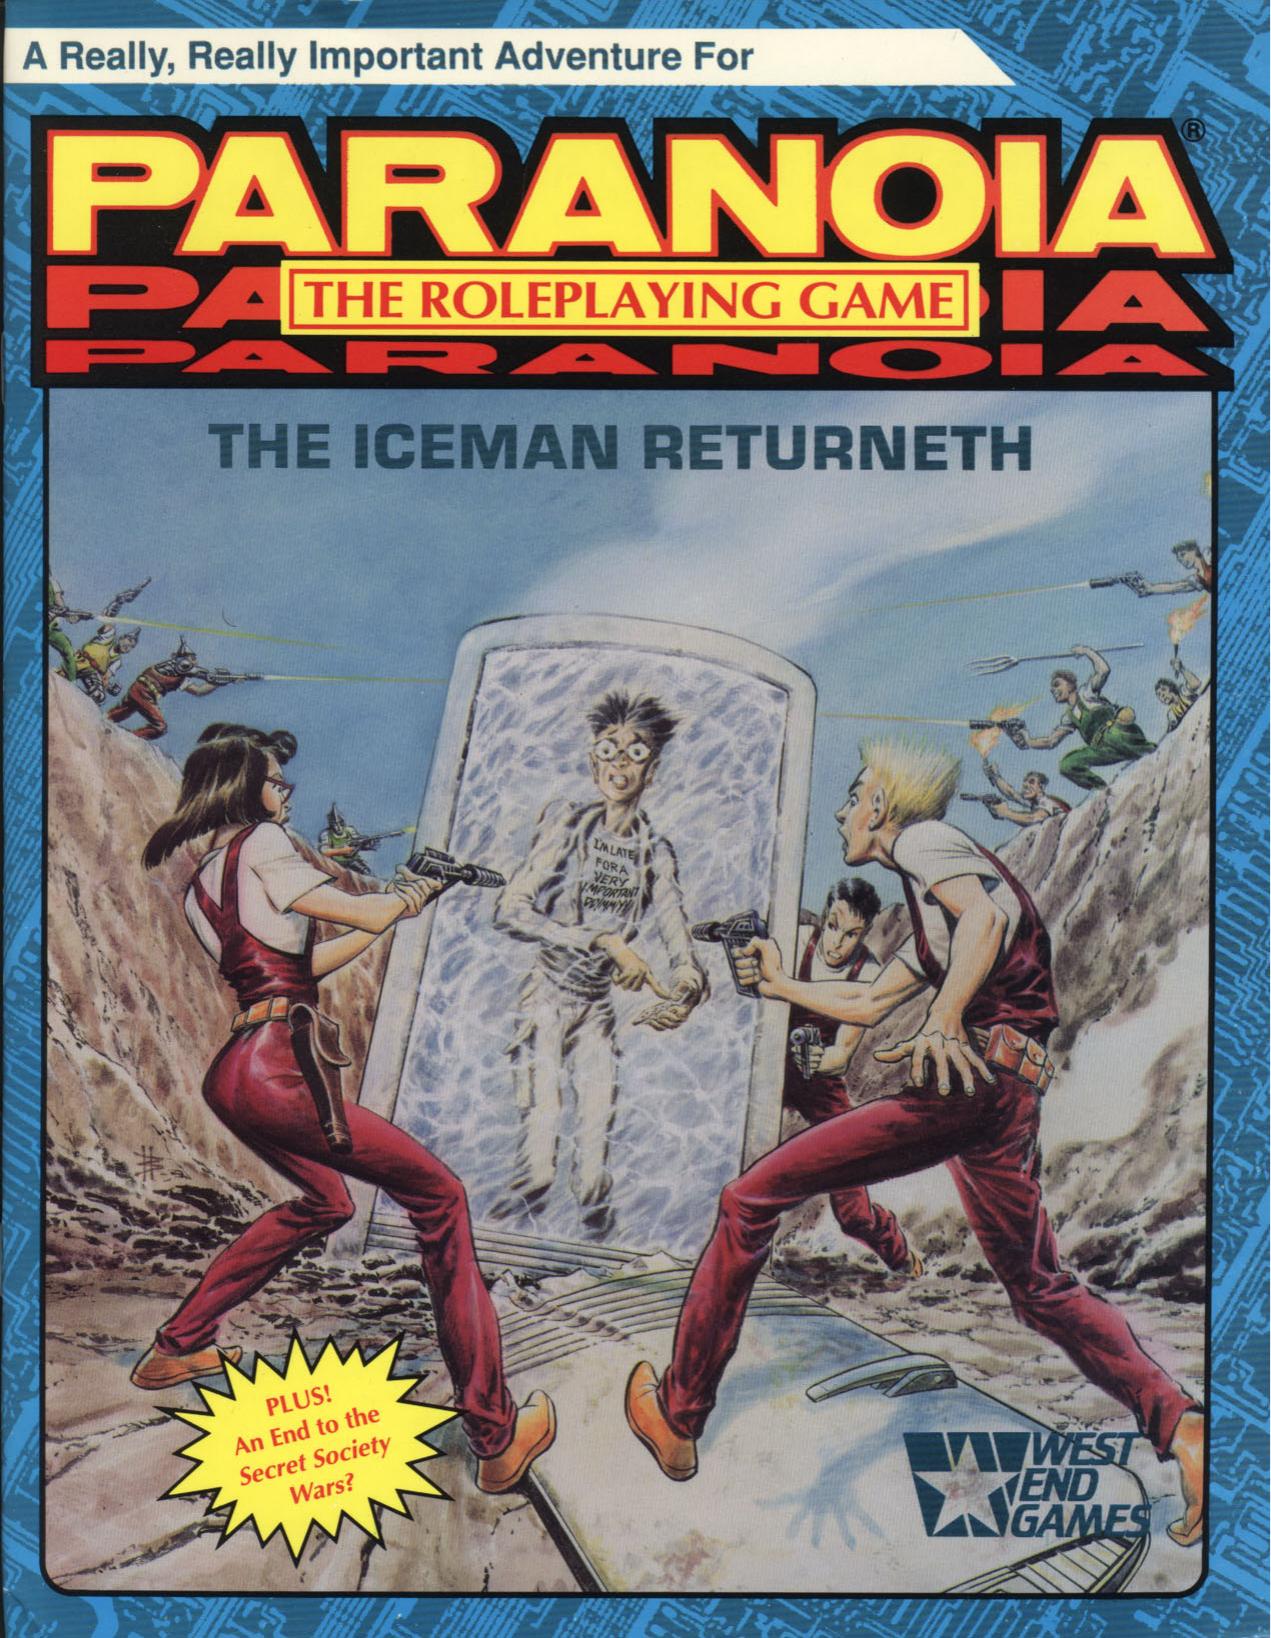 WEG12005 - The Iceman Returneth